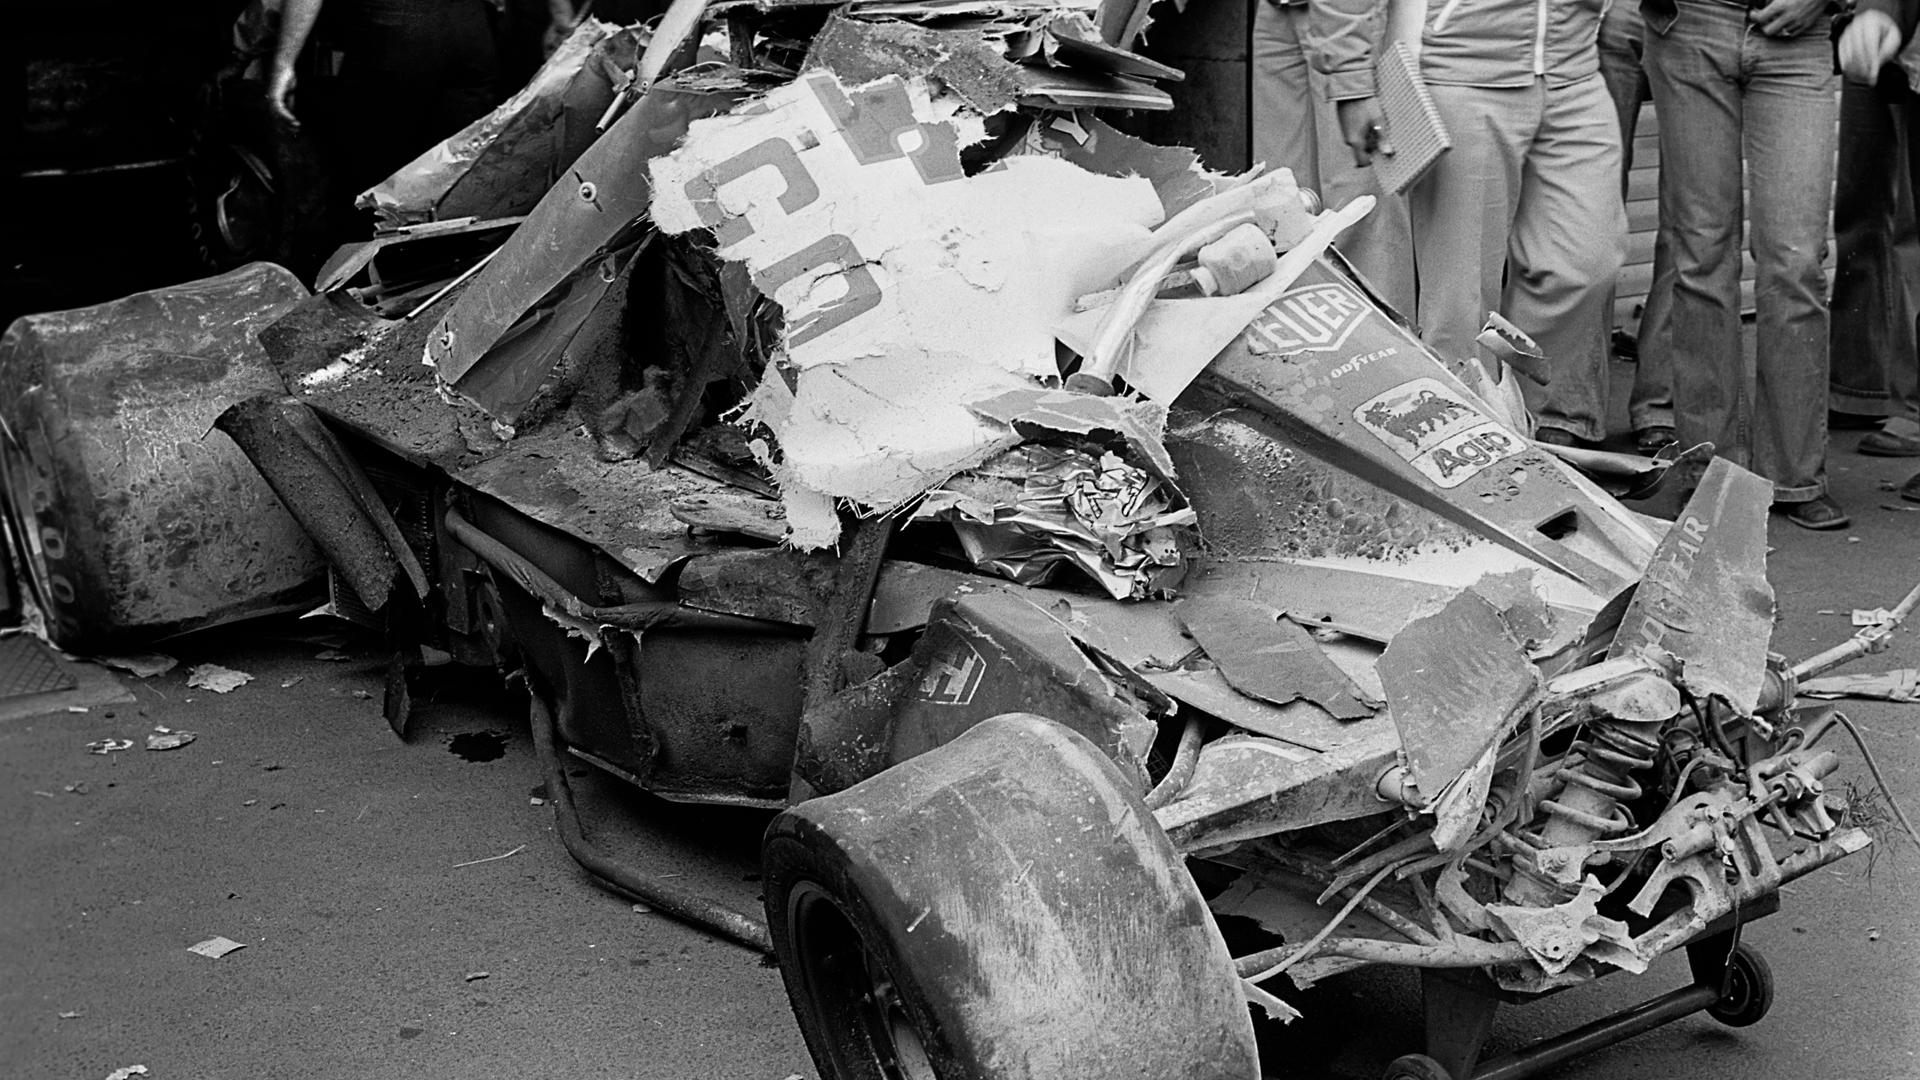 Niki Lauda il 1 176 agosto 1976 l incidente al Nurburgring